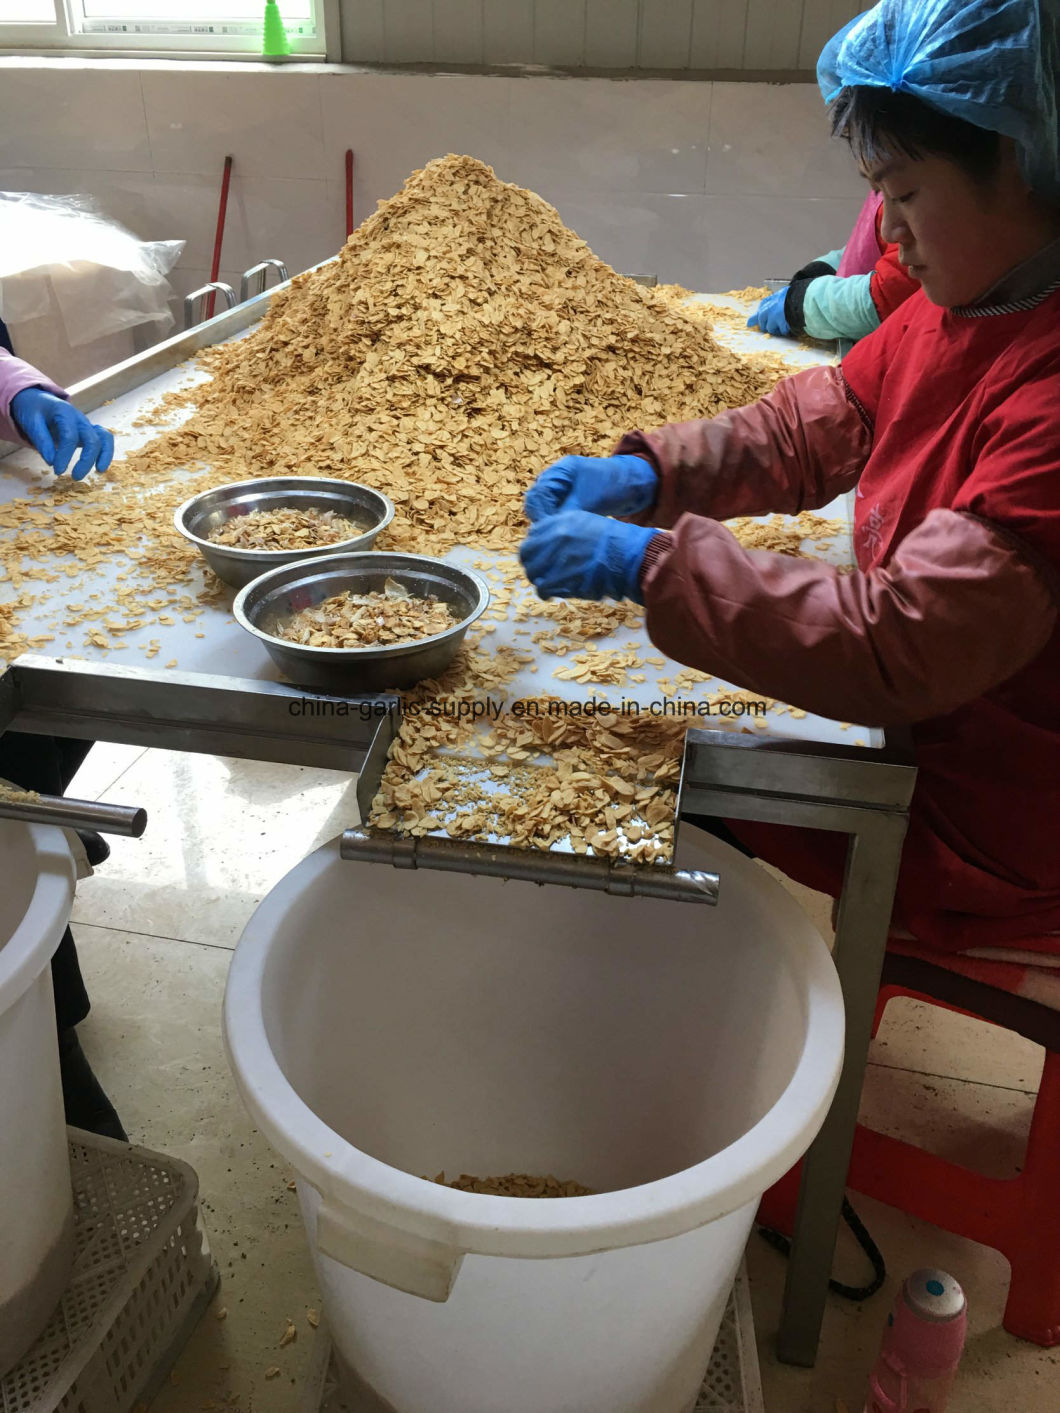 New Crop Chinese Dehydrated Garlic Flake